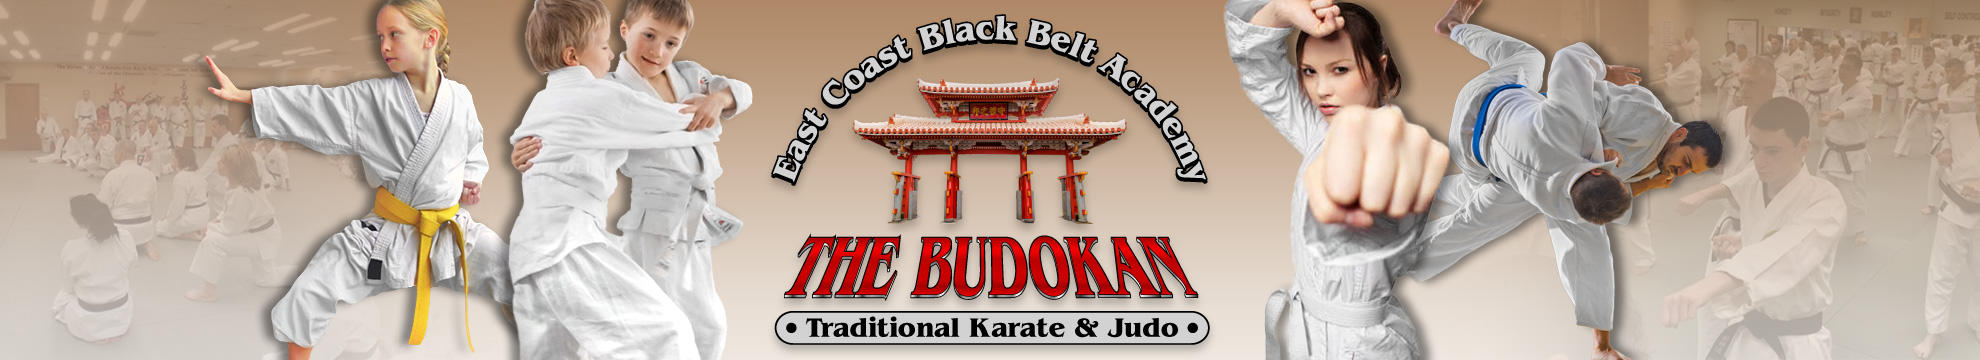 East Coast Black Belt Academy Photo